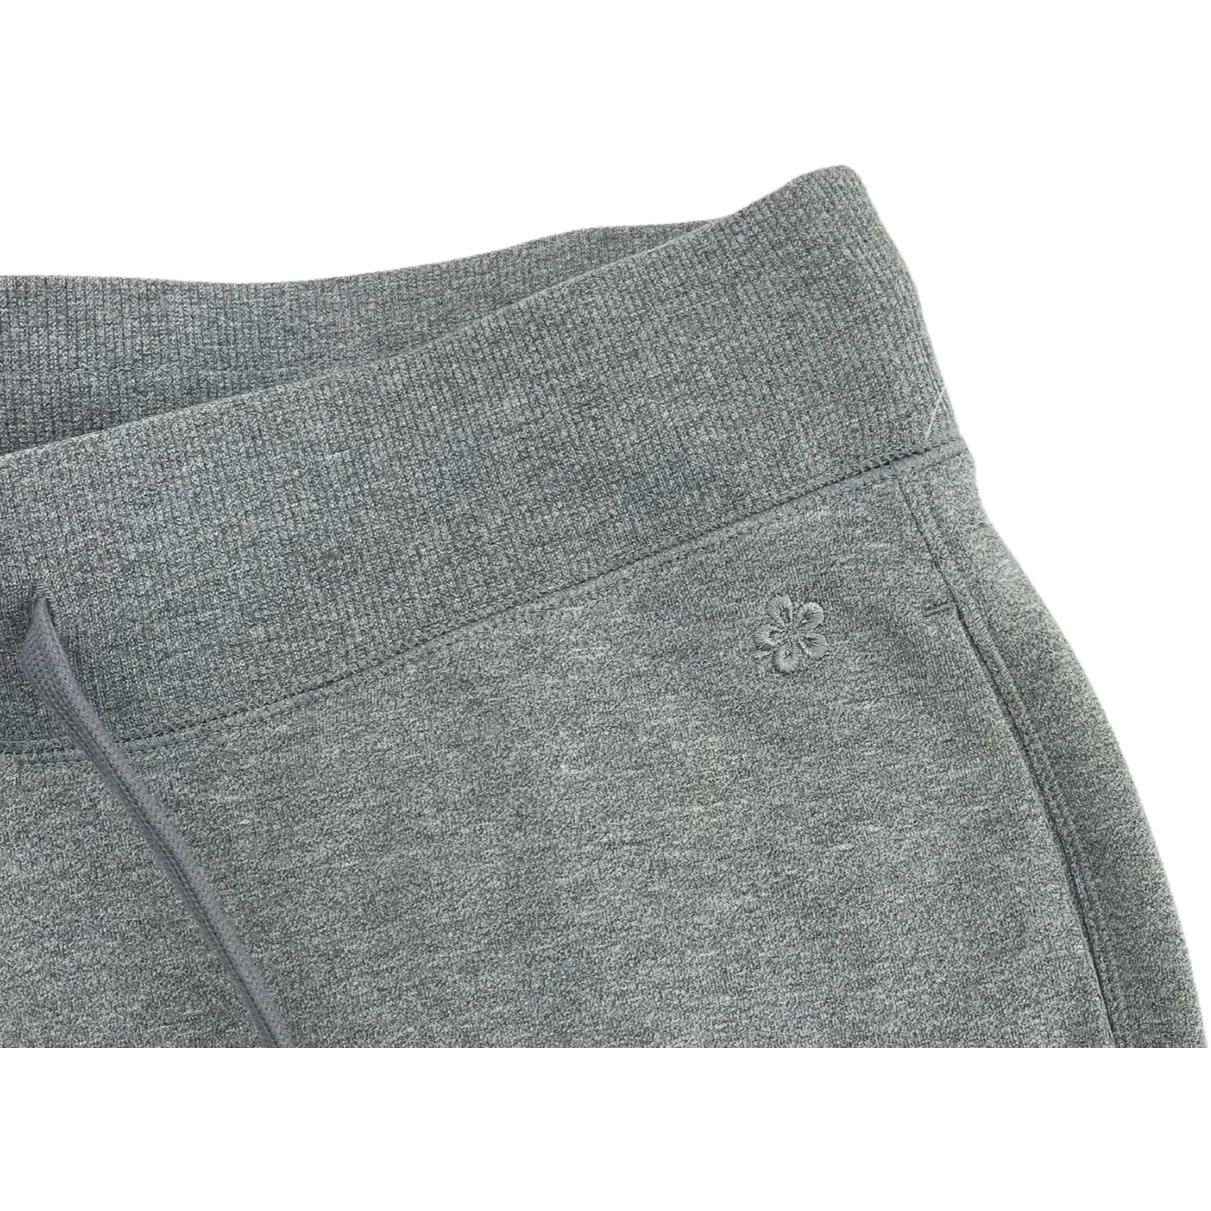 Tuff Athletics Women's Sweatpants / Light Grey / Size Small